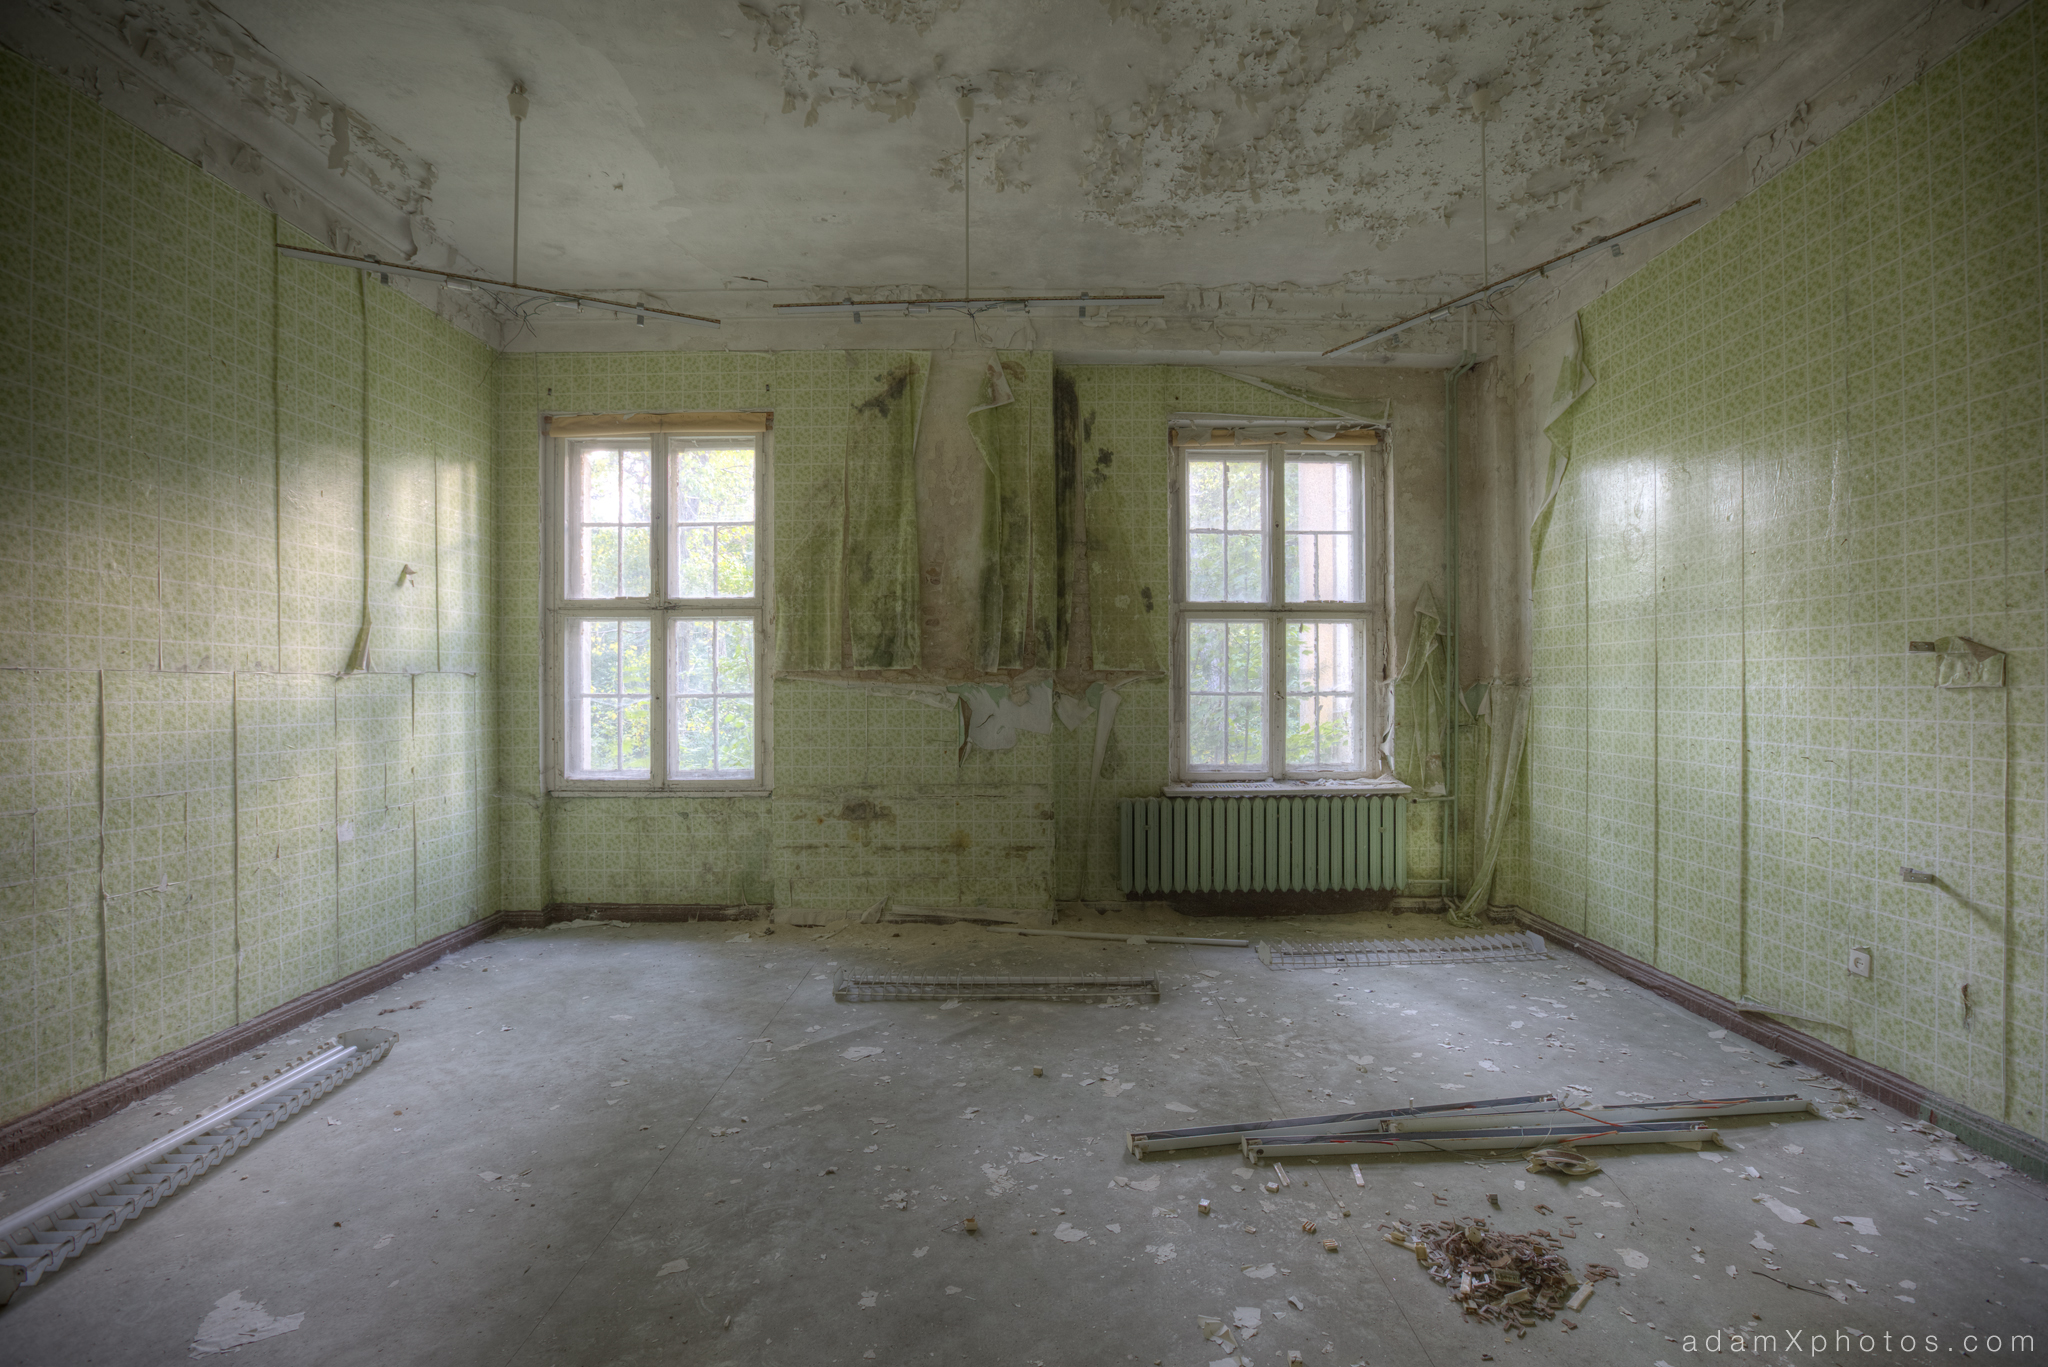 Adam X Urbex Urban Exploration Germany Juterbog School Soviet Russian Abandoned Lost Decay Green room tiled tiled